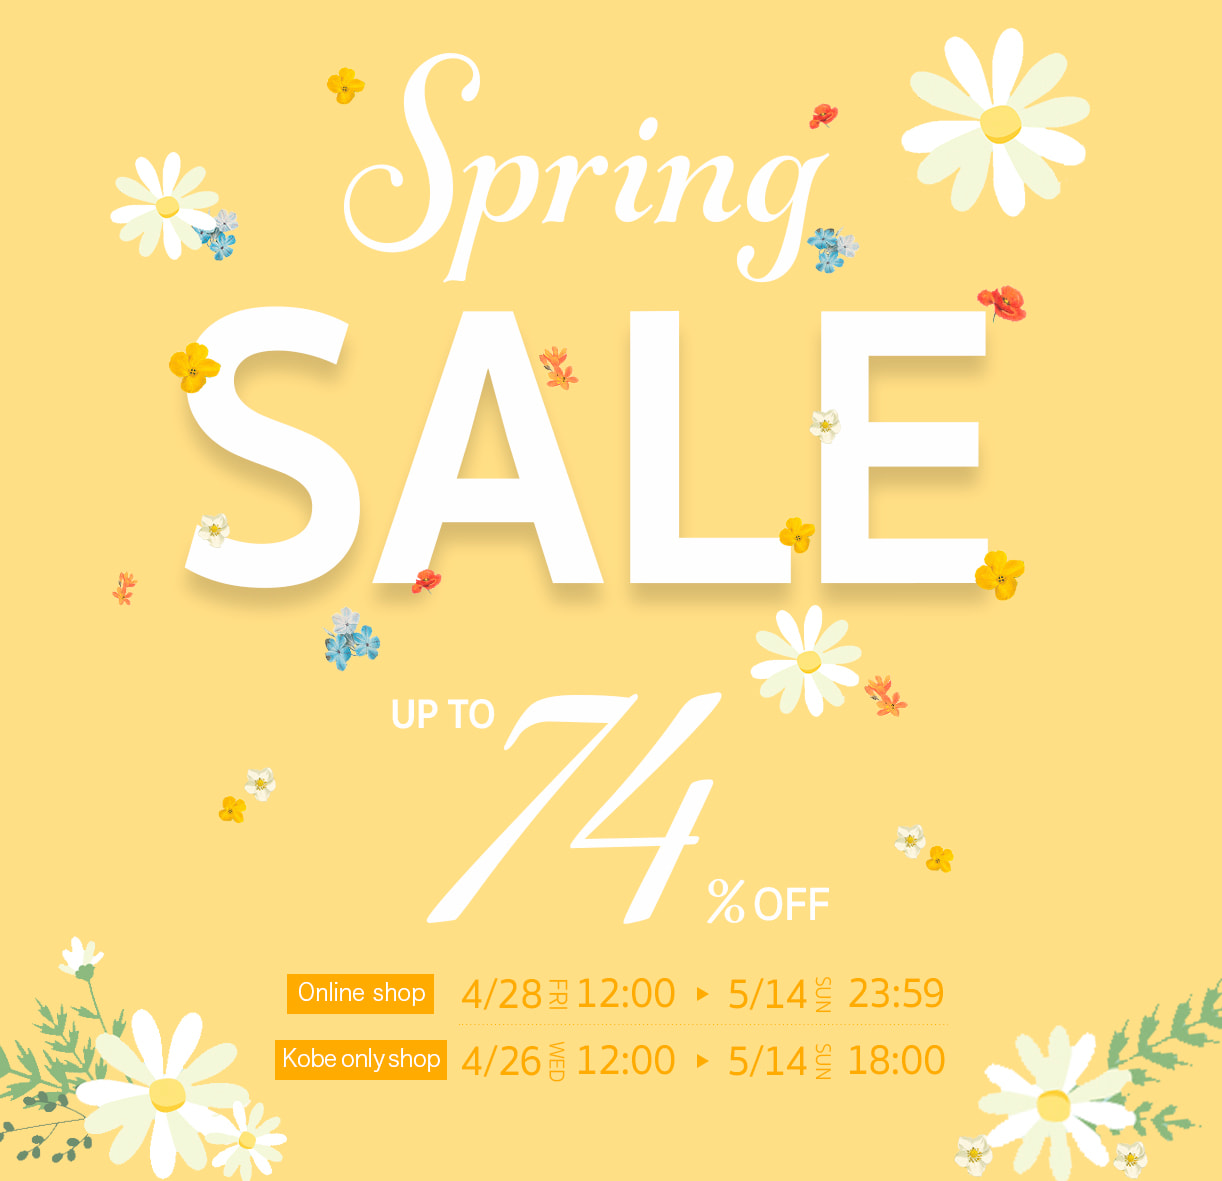 Spring SALE (UP TO 74% OFF) Online shop： 4/28 12:00 - 5/14 23:59 / Kobe only shop： 4/26 12:00 - 5/14 18:00